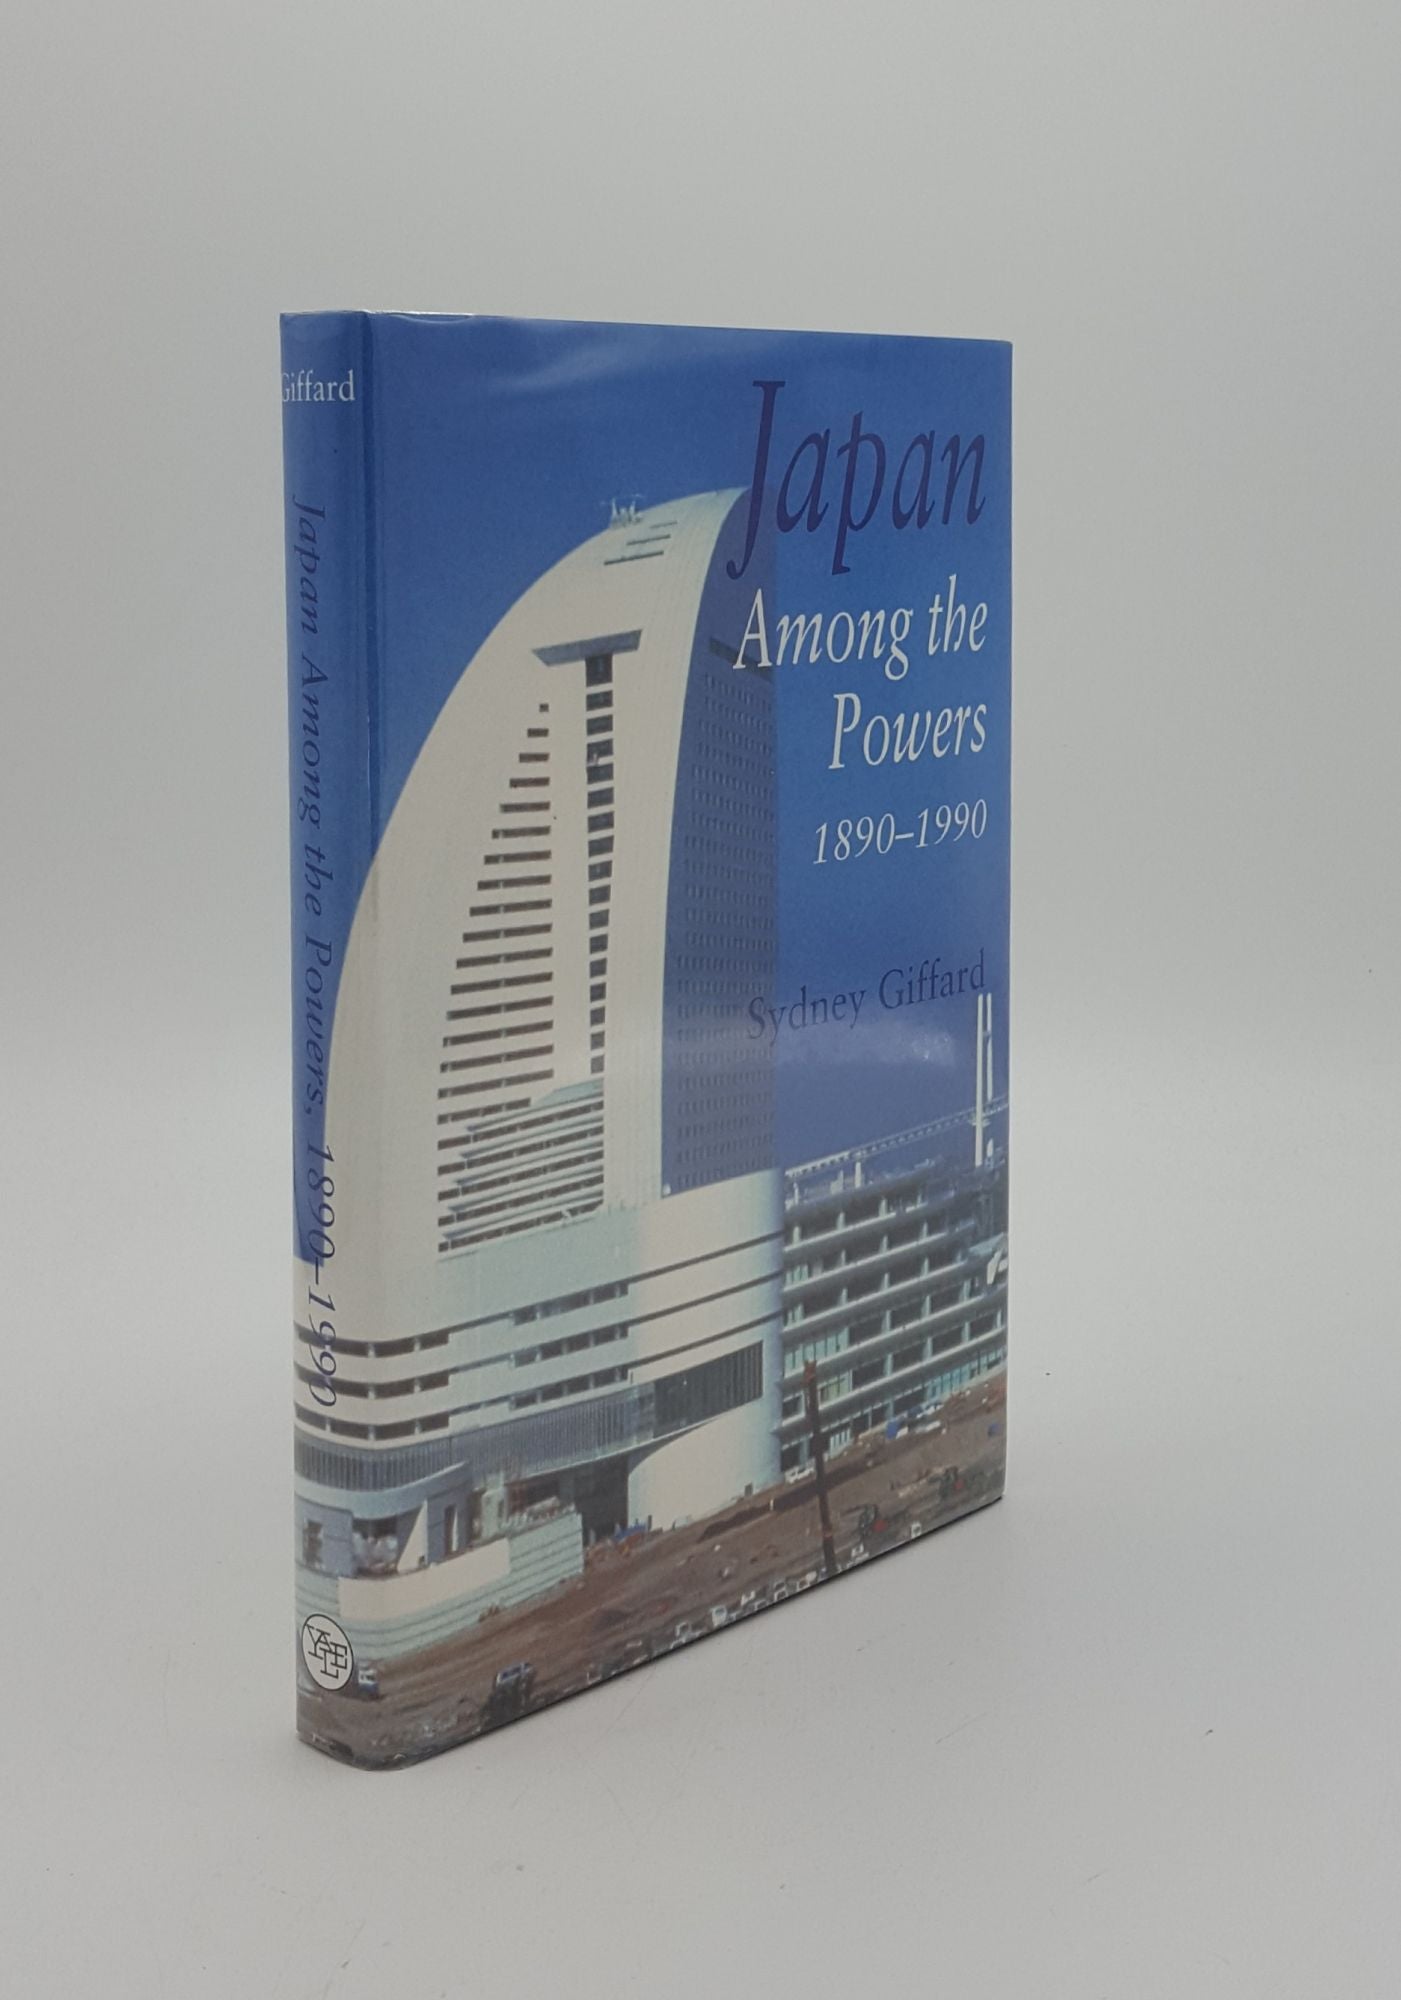 GIFFARD Sydney - Japan Among the Powers 1890-1990